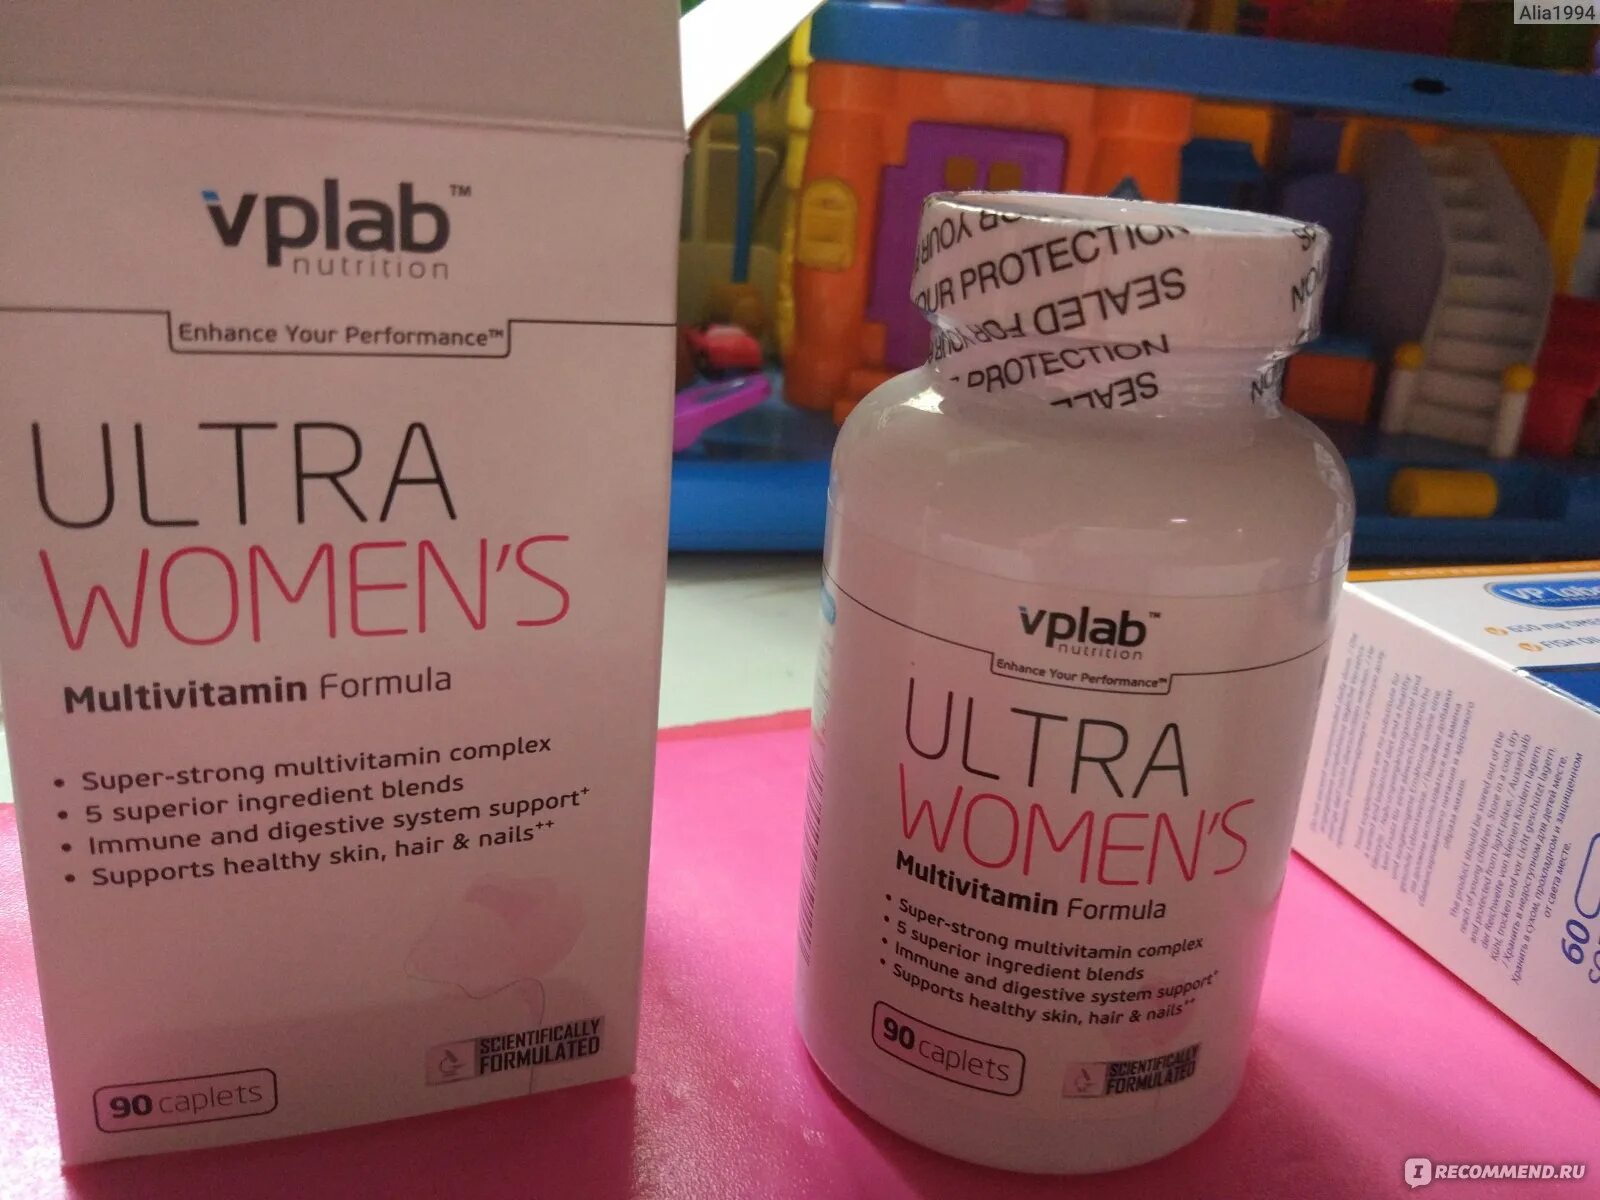 Витамины VPLAB Ultra women's. Витамины VP Laboratory Ultra women's Multivitamin Formula. Ultra Womens витамины VPLAB состав. VP Laboratory Ultra women's Multivitamin Formula 90 капс.